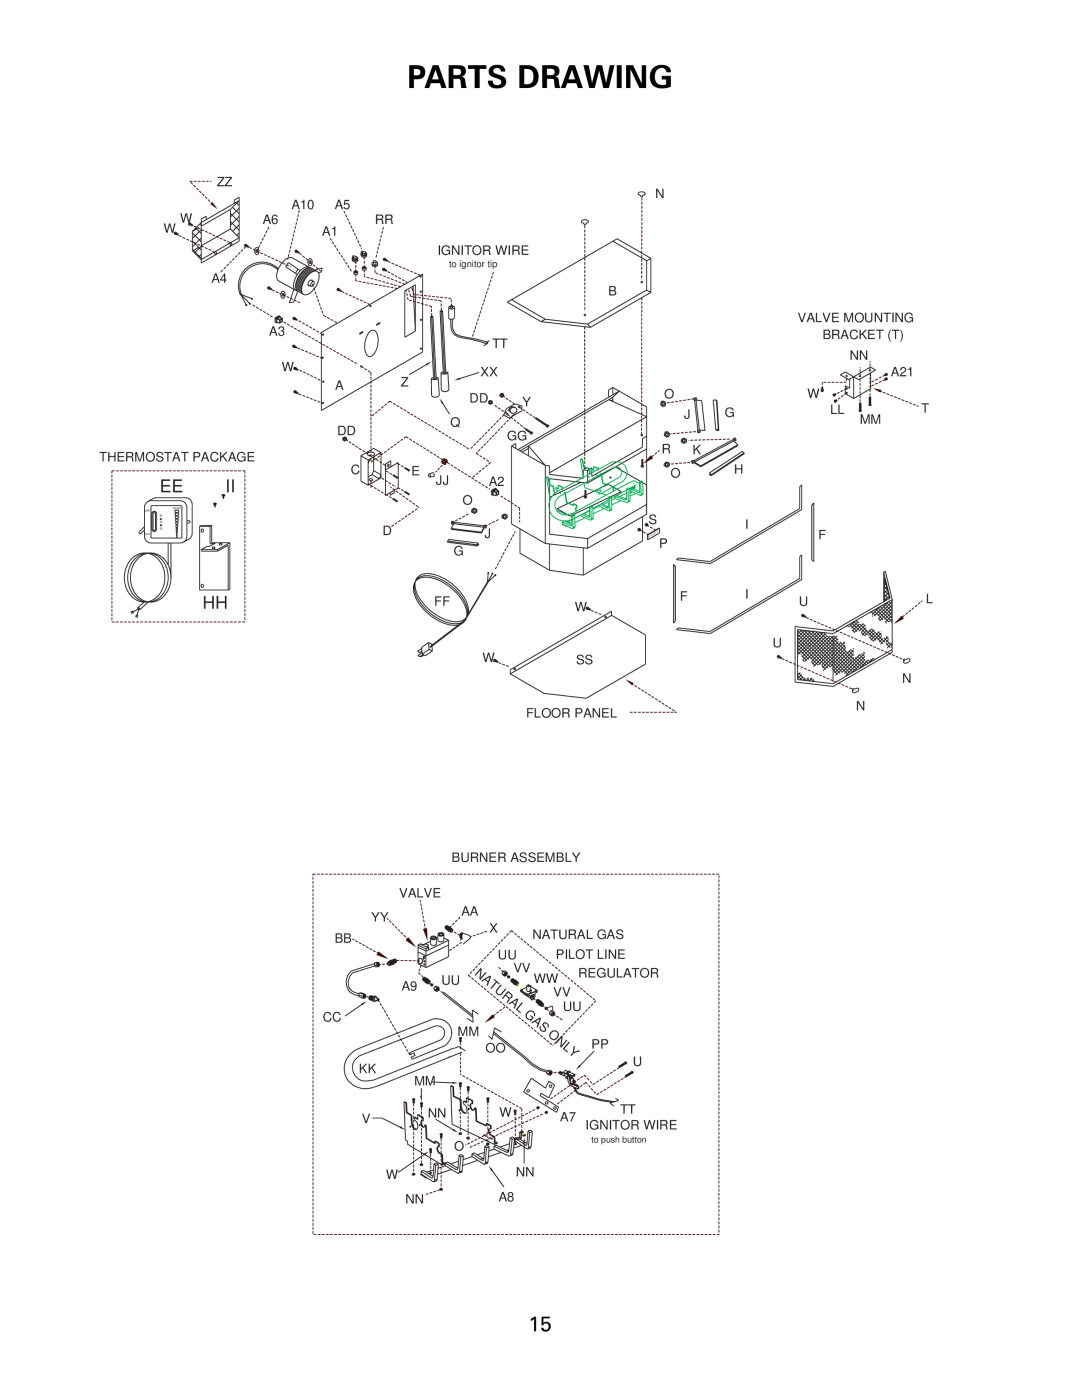 Heatmaster HMDGJ, HMDGII manual Parts Drawing, Eeii 